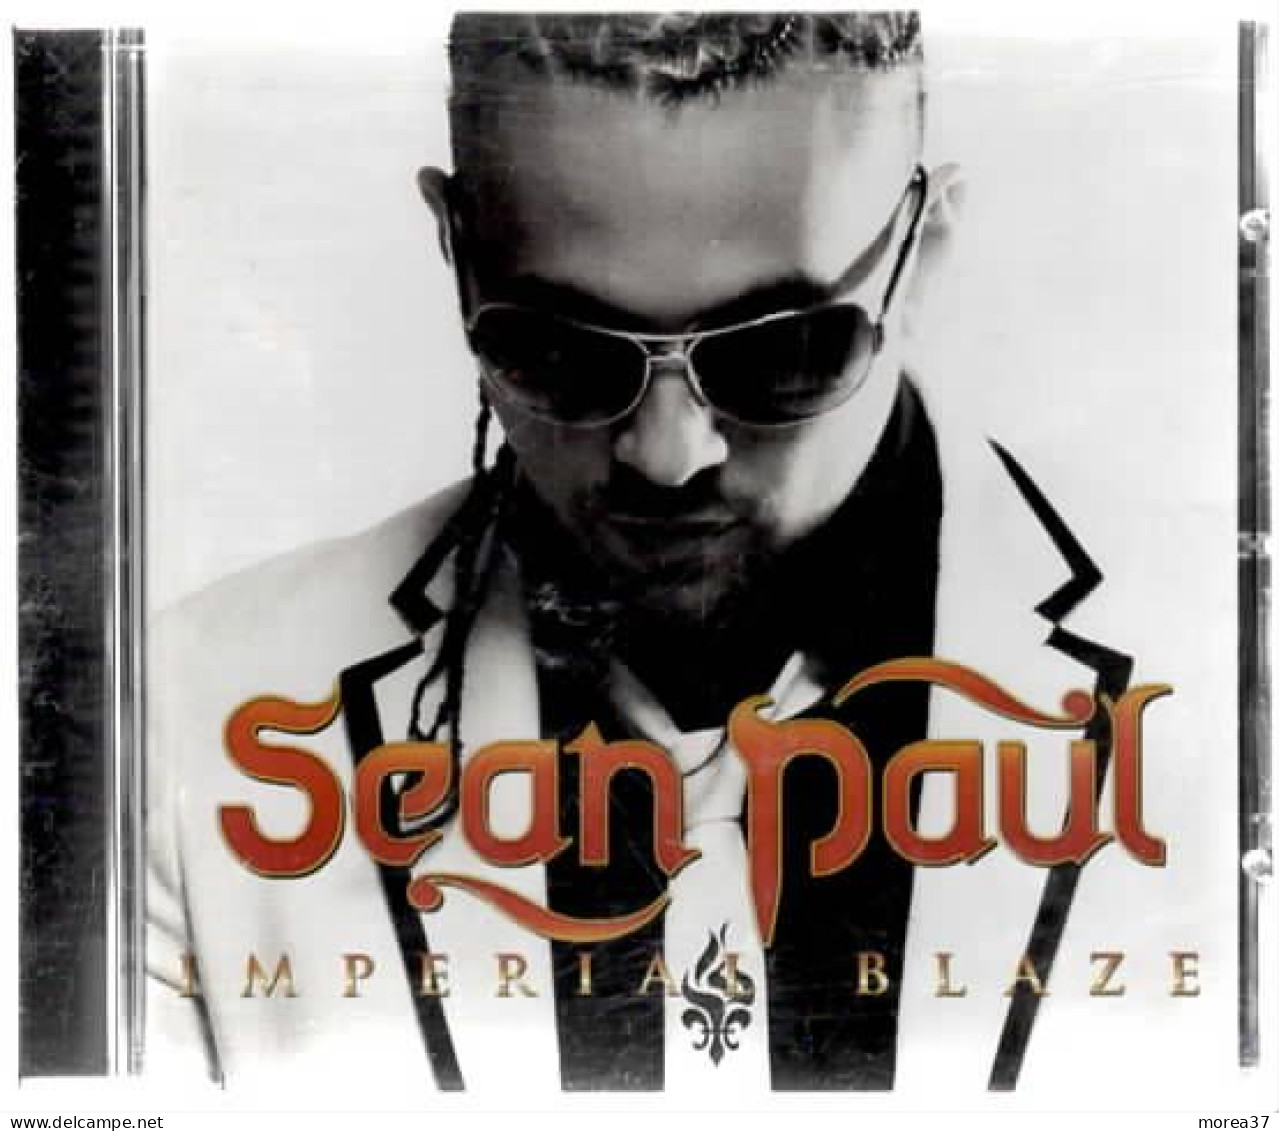 SEAN PAUL  Impérial Blaze       CD 1 - Sonstige - Englische Musik